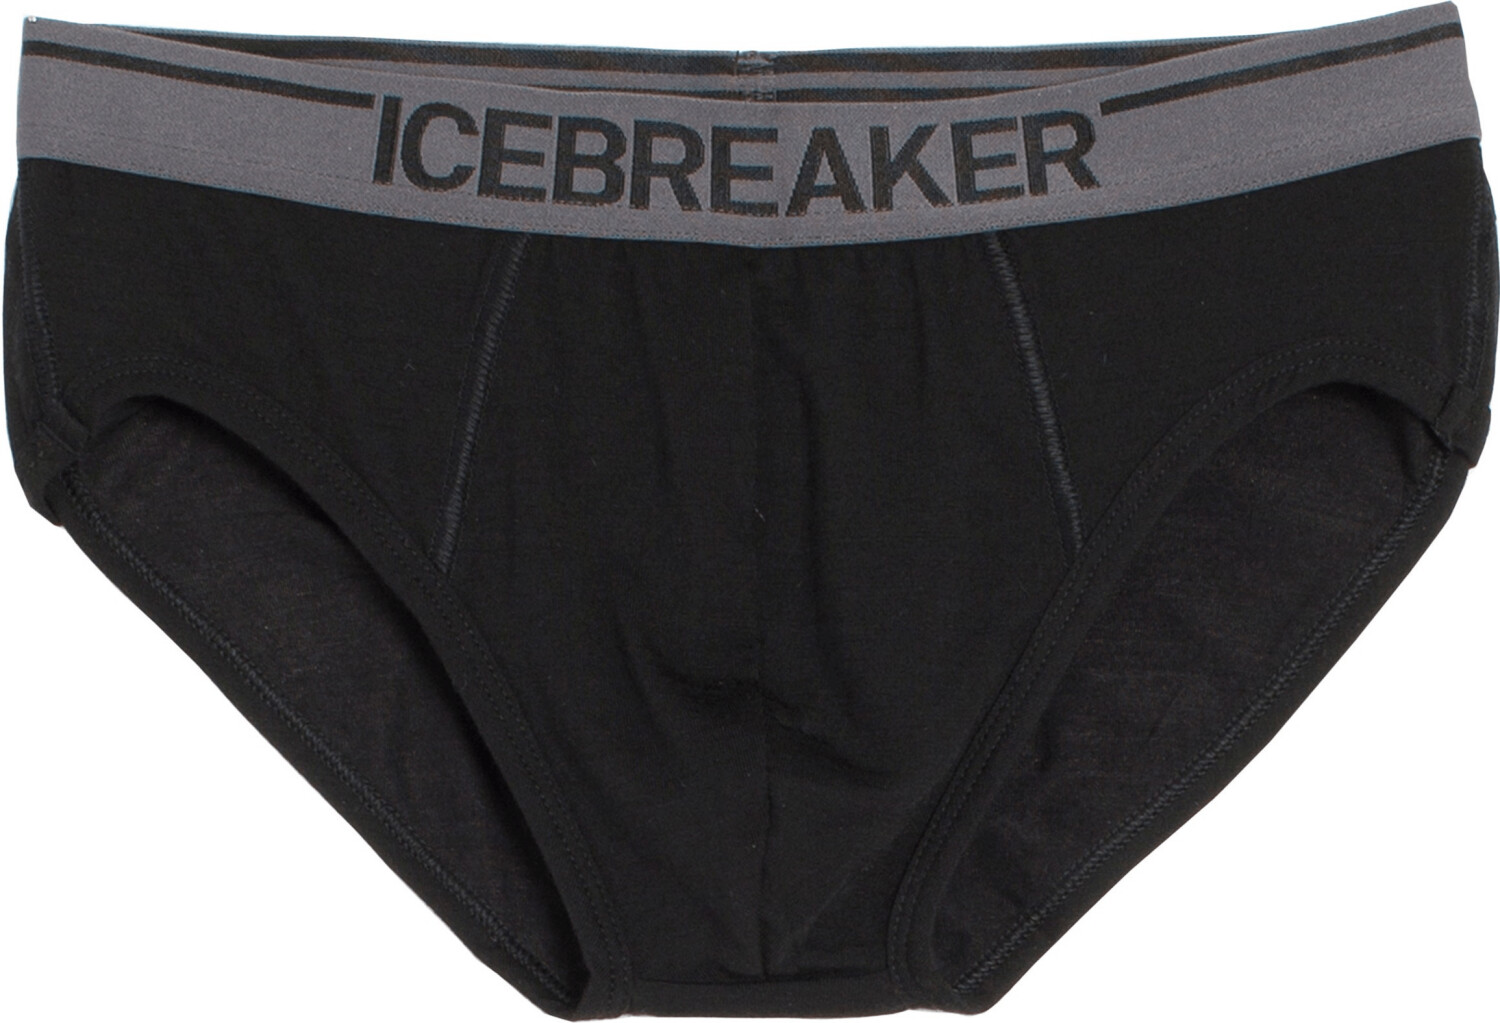 Buy Icebreaker Anatomica Briefs (103031) from £23.99 (Today) – Best Deals  on